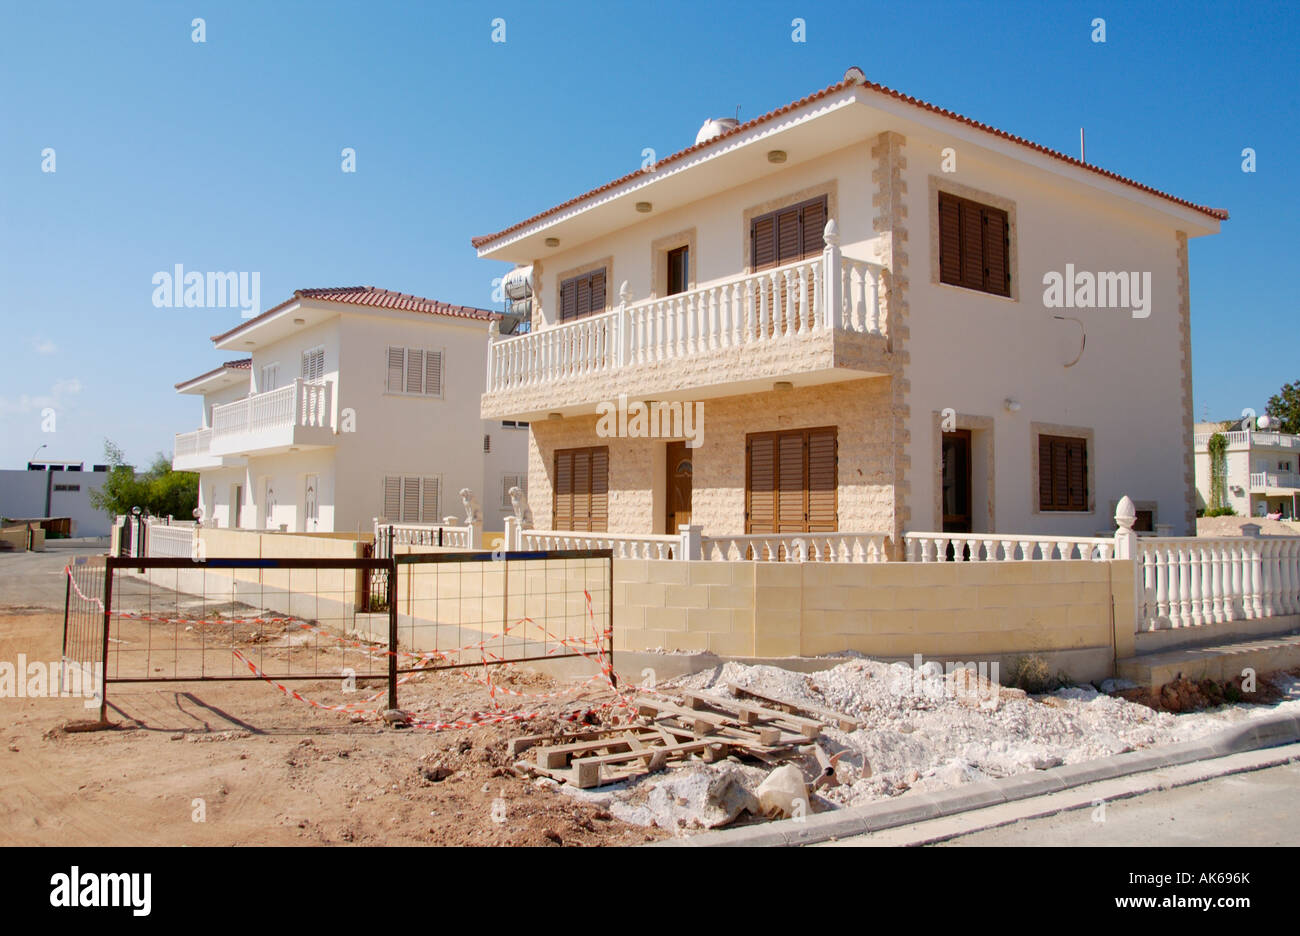 Typical modern holiday villas on the Mediterranean island of Cyprus EU under construction Stock Photo